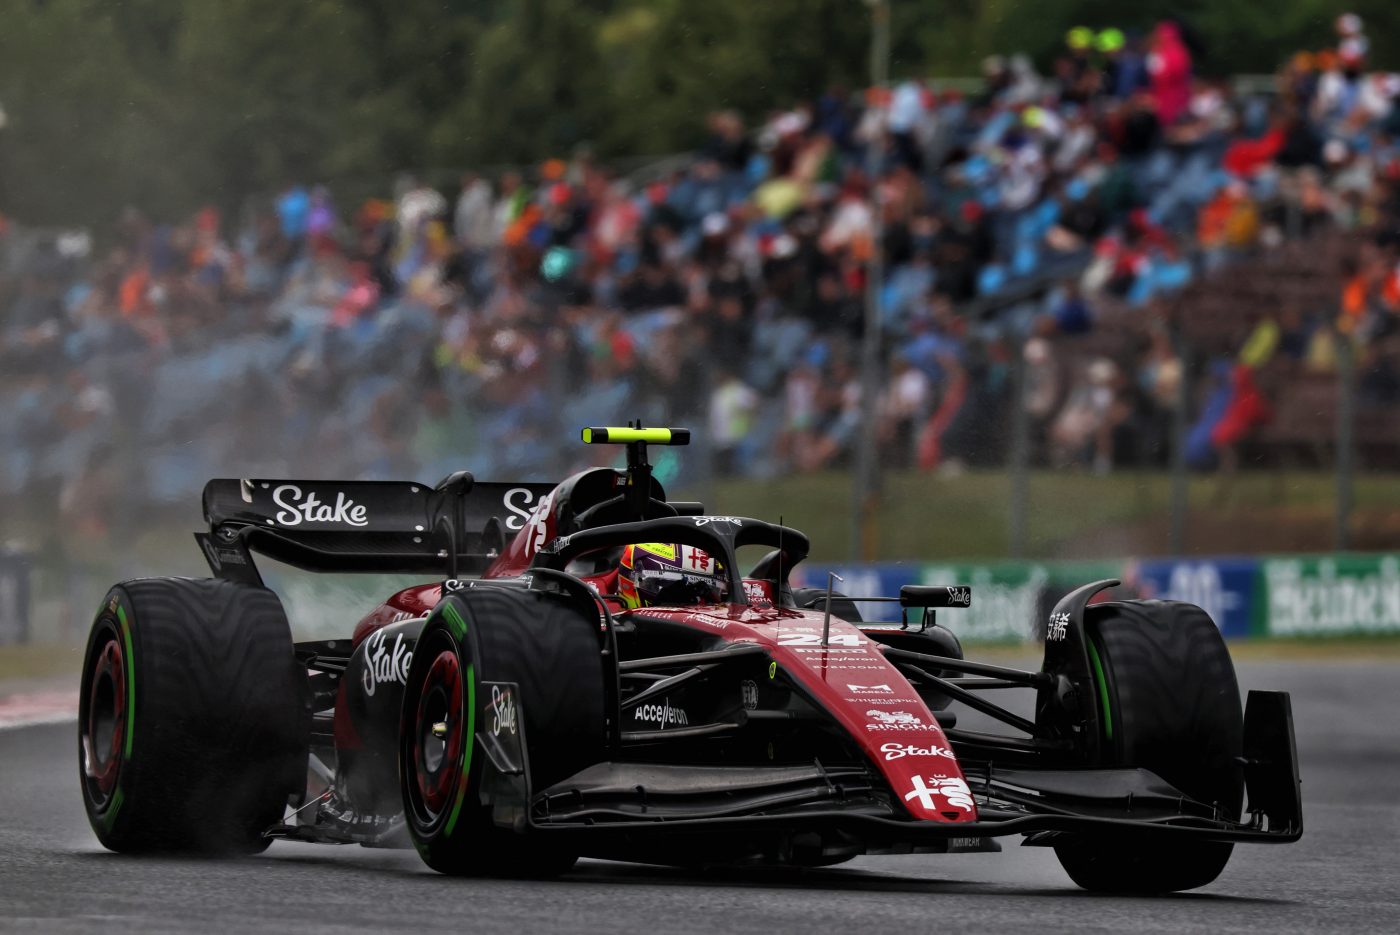 2023-Hungarian-Grand-Prix-Friday-2-1400x935 (1).jpg